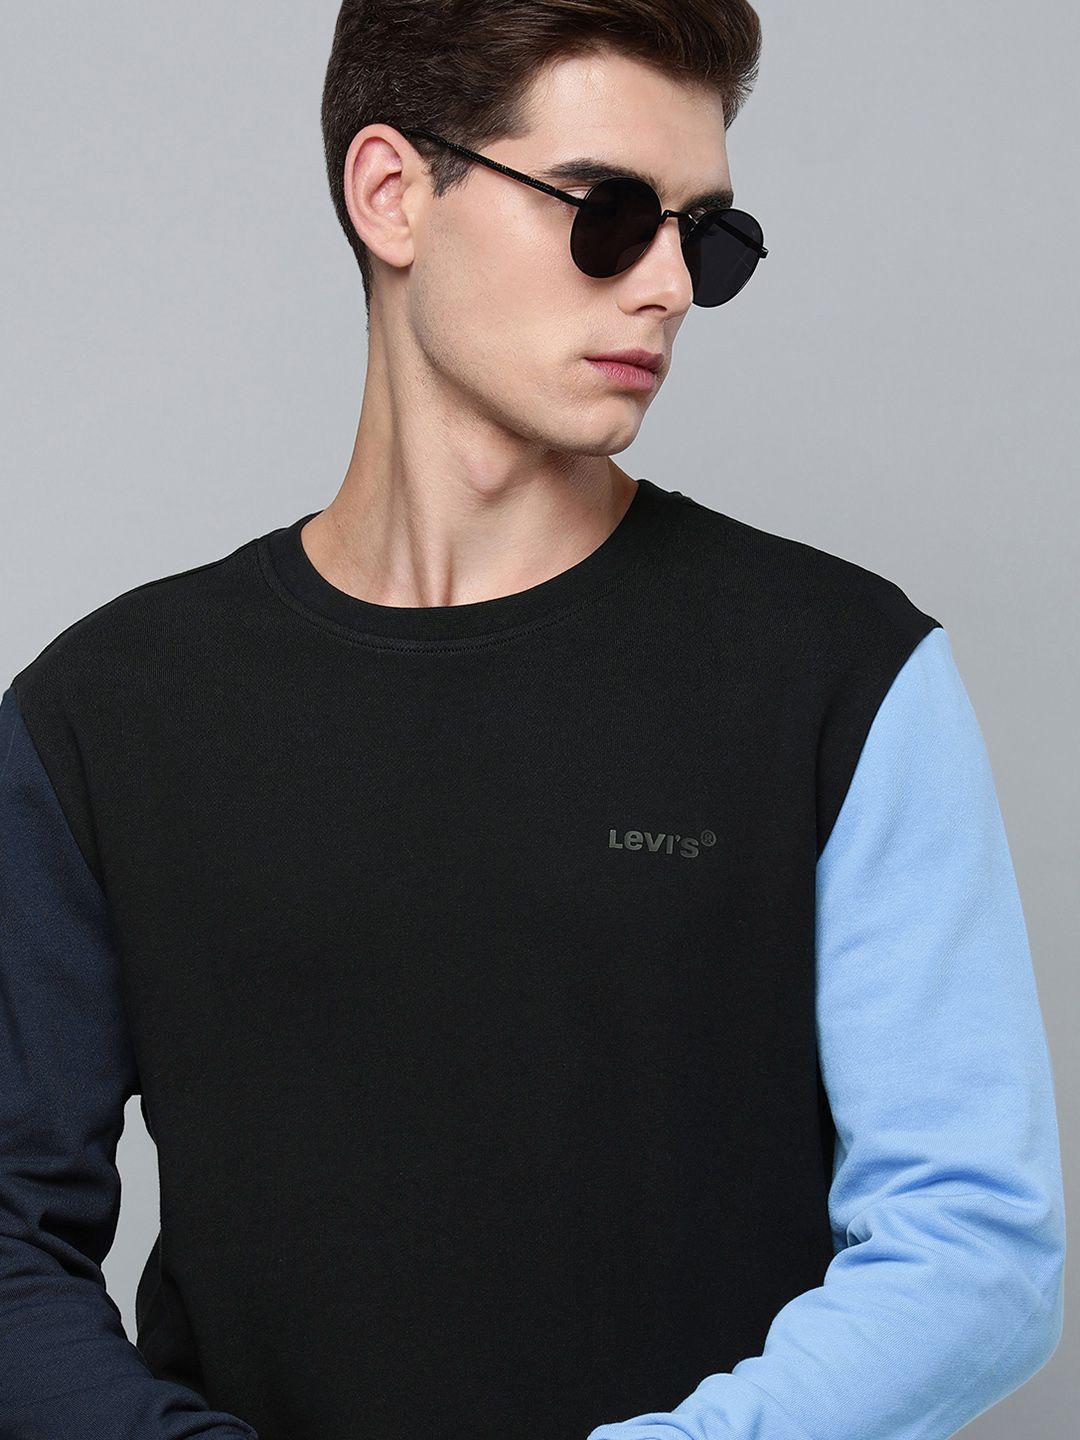 levis men black colourblocked full sleeved casual sweatshirt